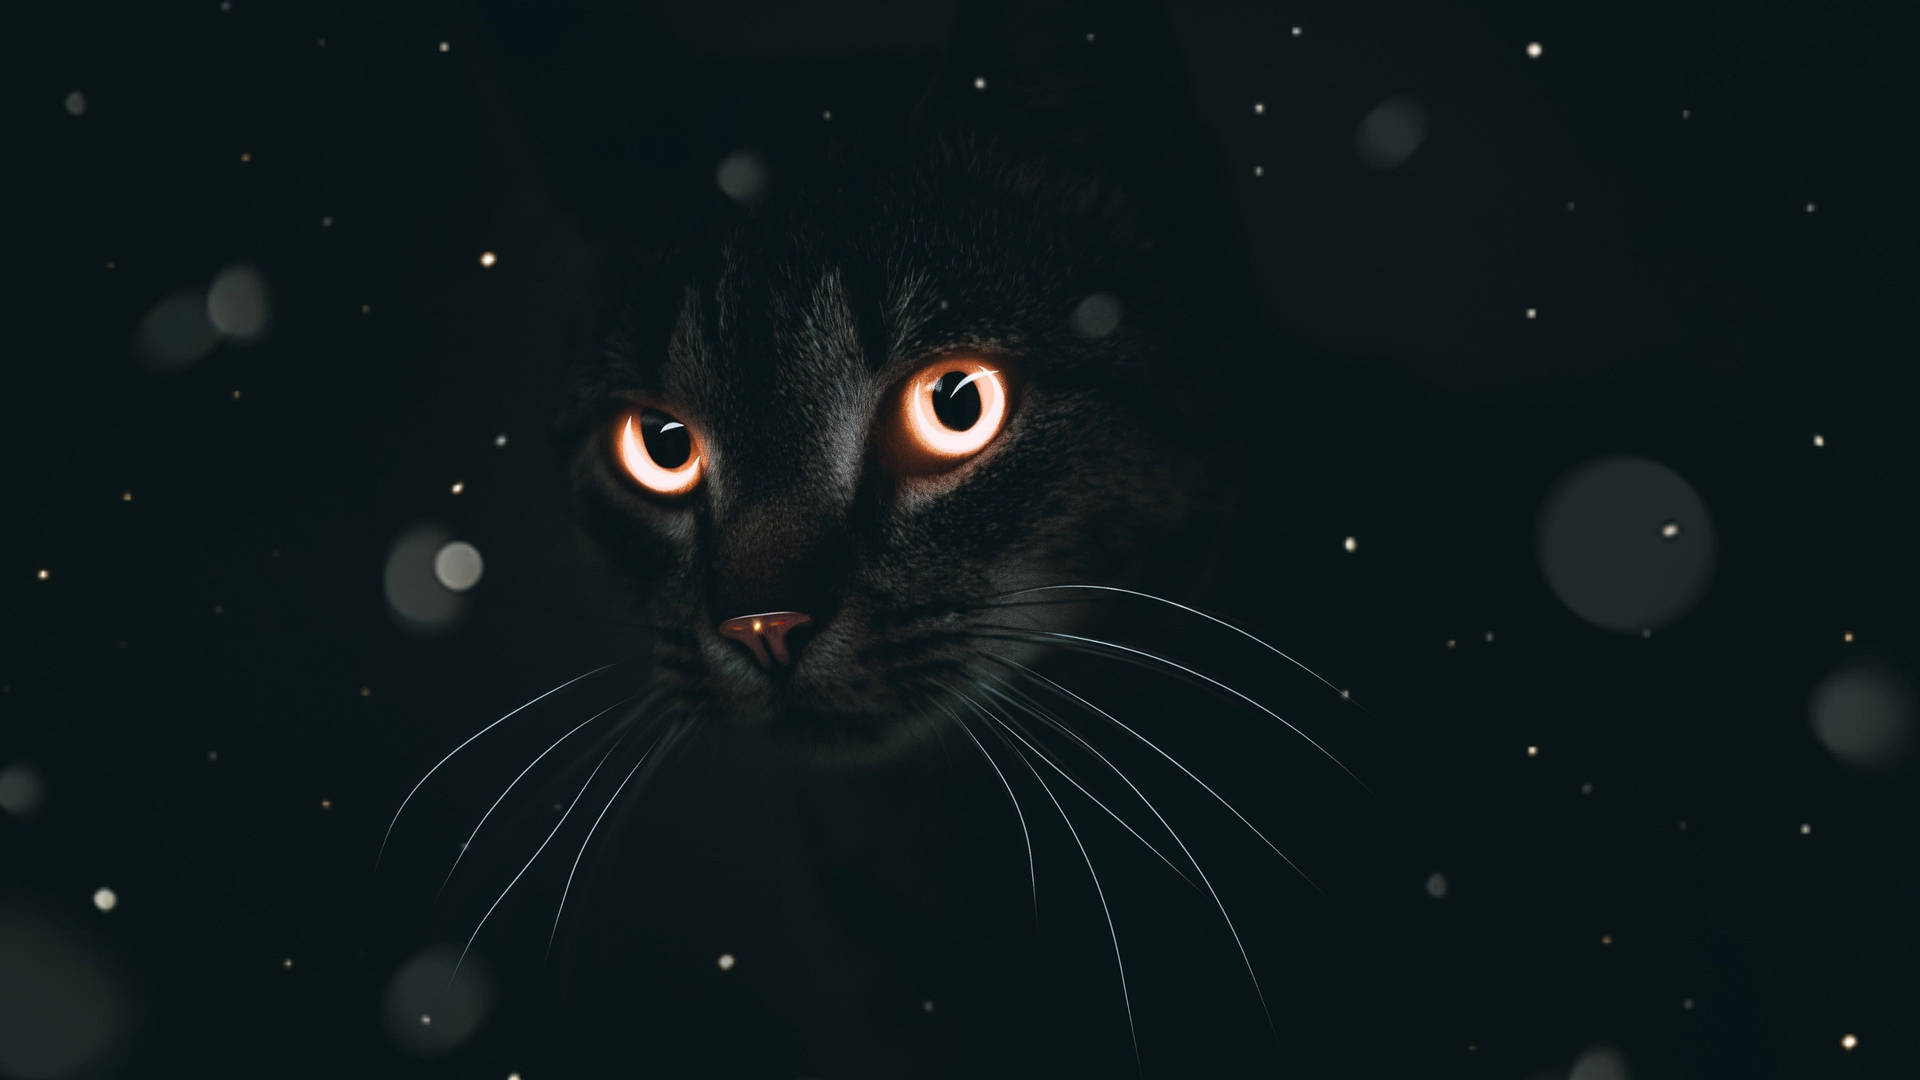 Free Black Cat Wallpaper Downloads, [200+] Black Cat Wallpapers for FREE |  